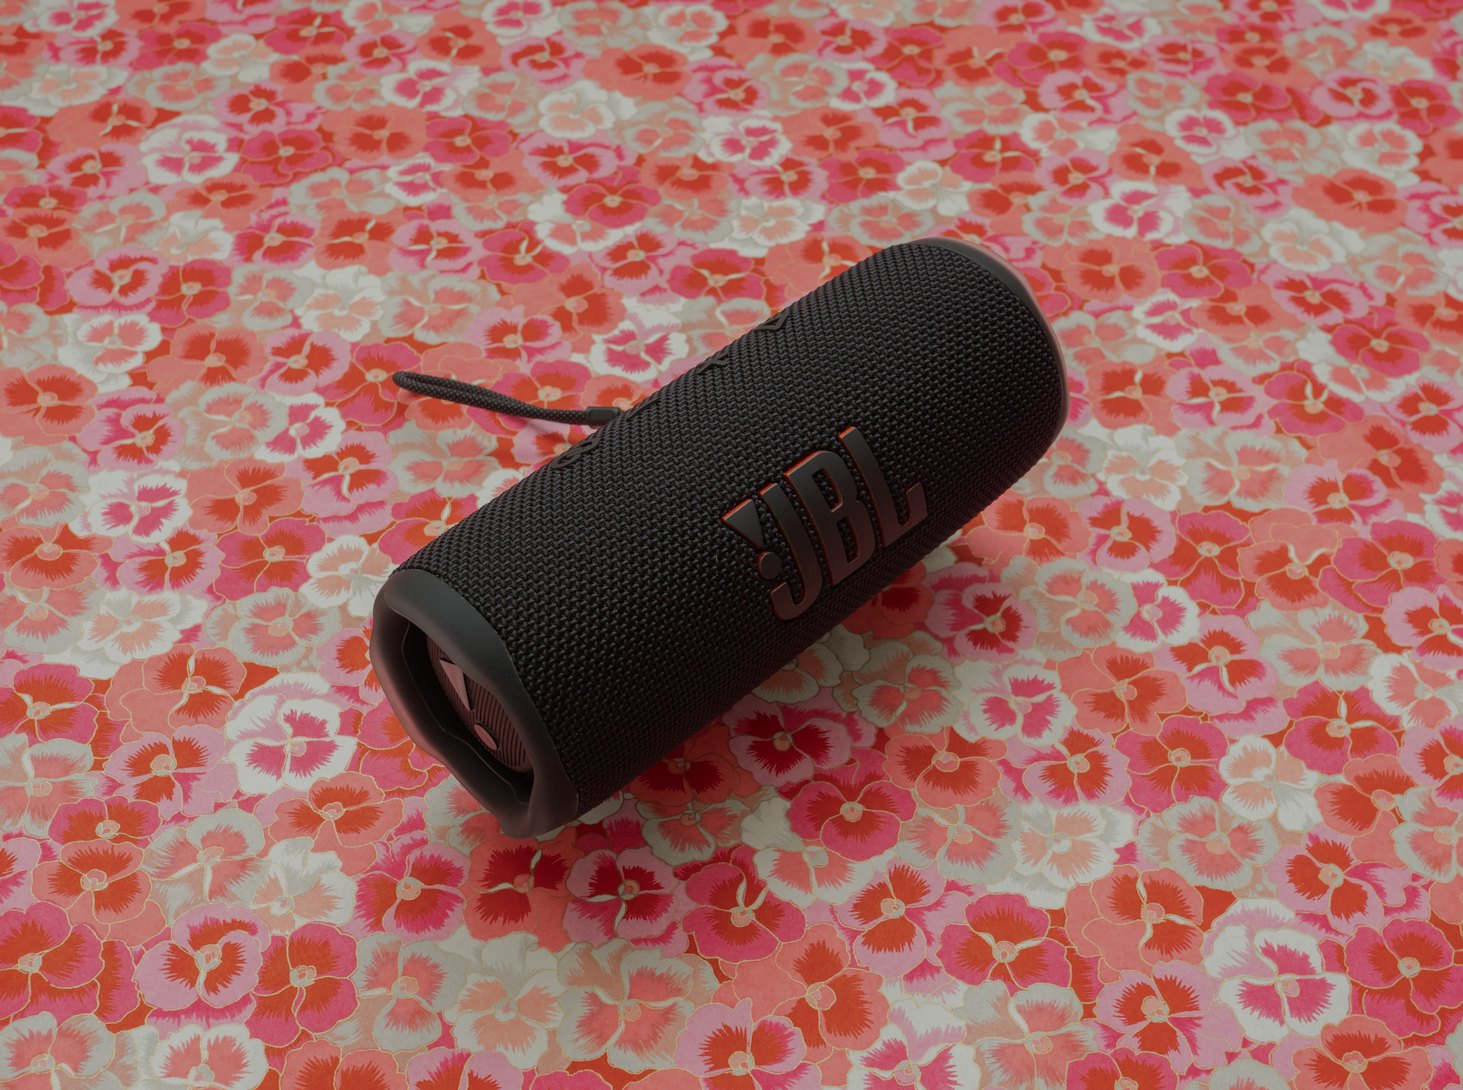 JBL Flip 6 review: A loud, but phoned-in Bluetooth speaker